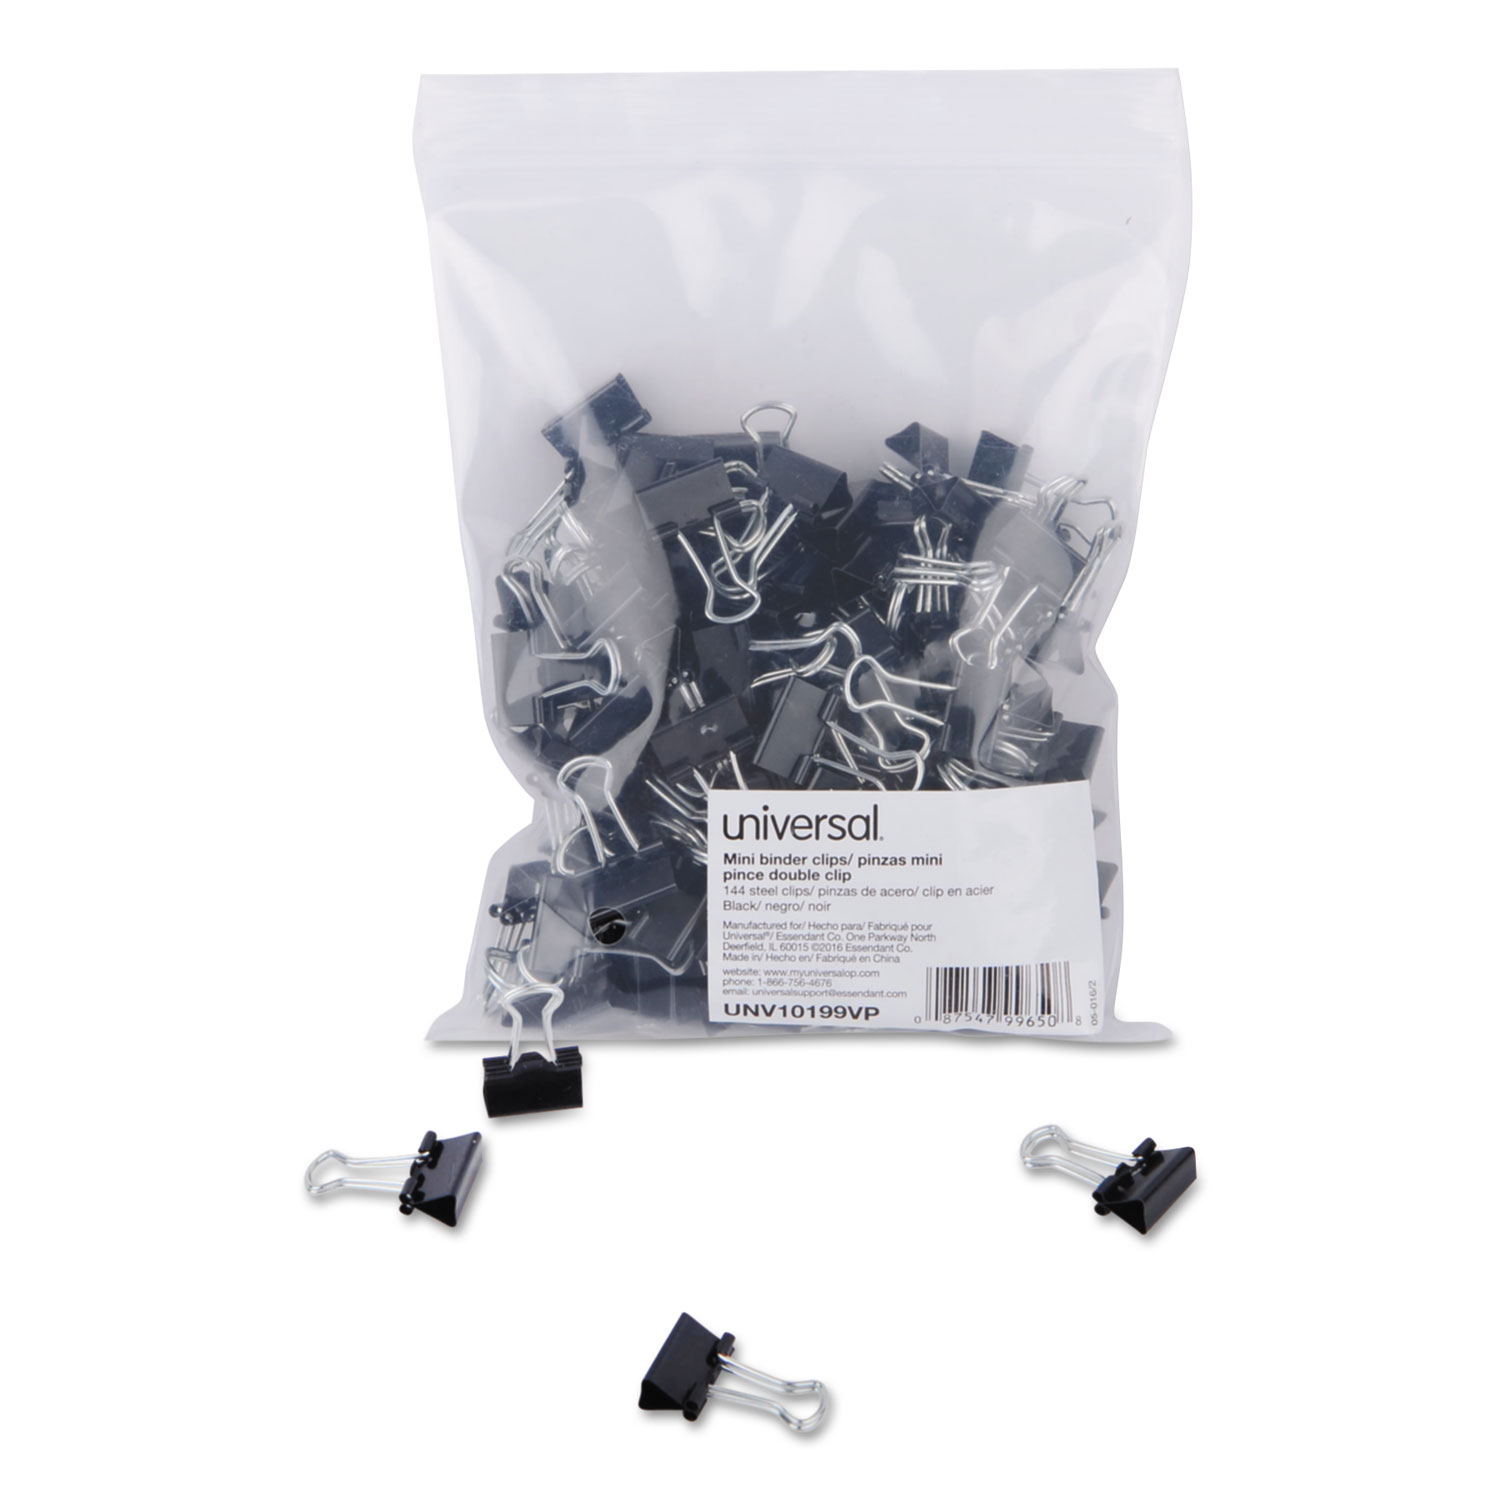  Universal UNV10199VP Binder Clips in Zip-Seal Bag, Mini, Black/Silver, 144/Pack (UNV10199VP) 